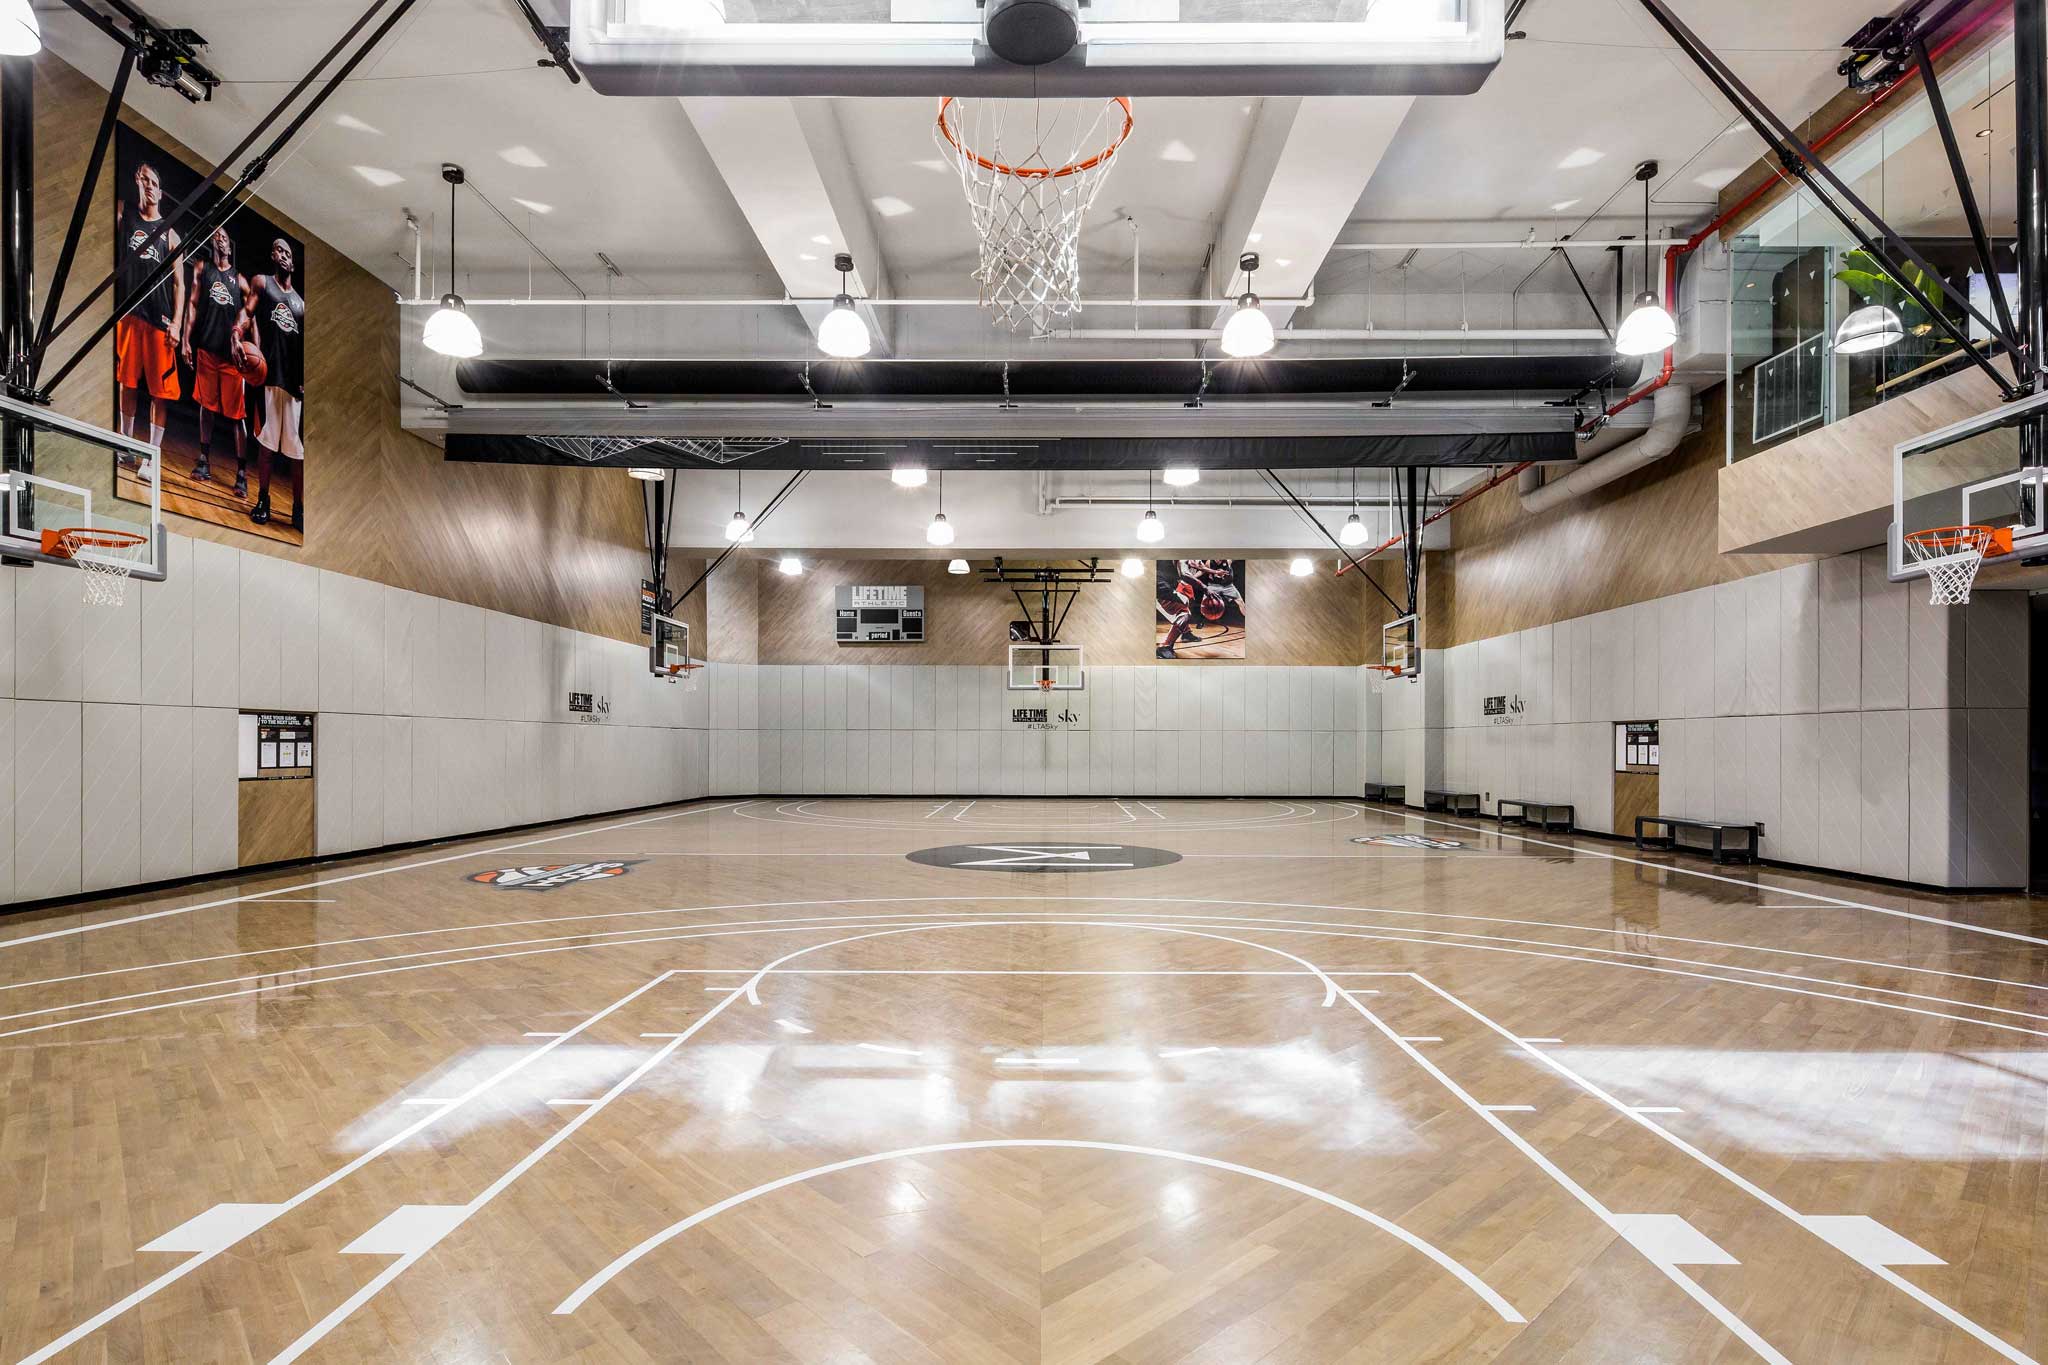 Basketball Court at Sky Lifetime Fitness